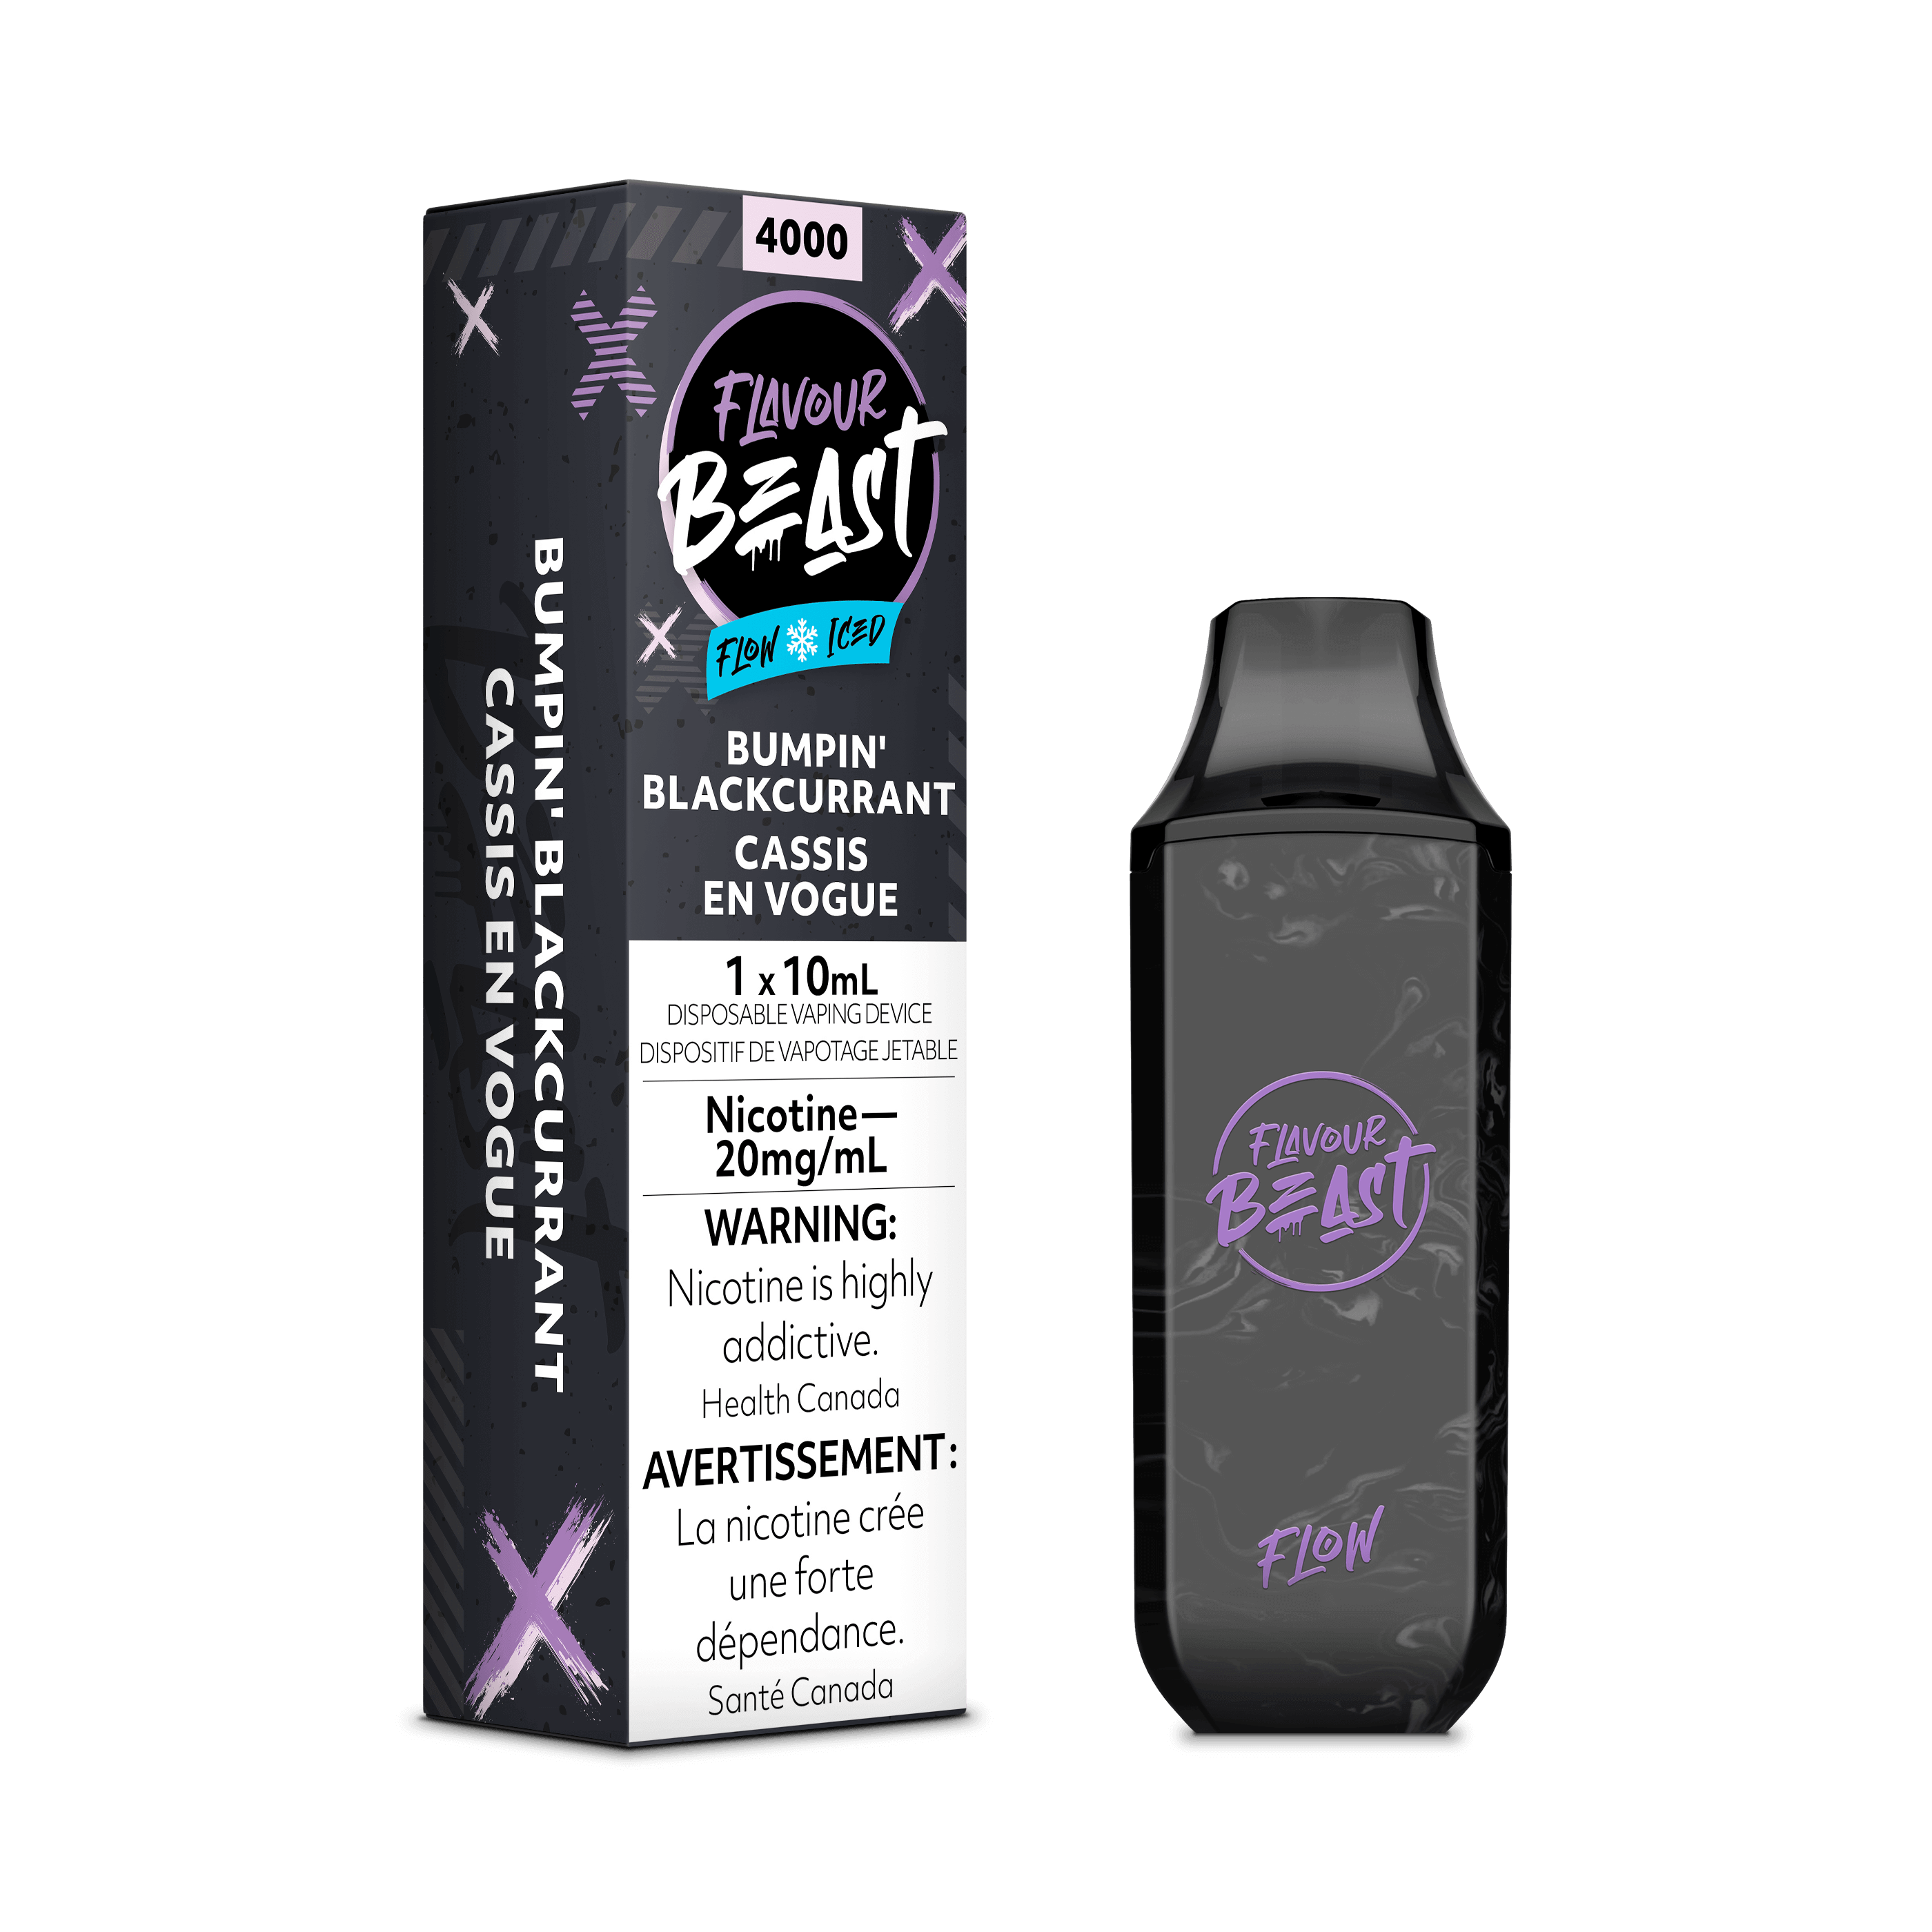 Flavour Beast - Bumpin Blackcurrant